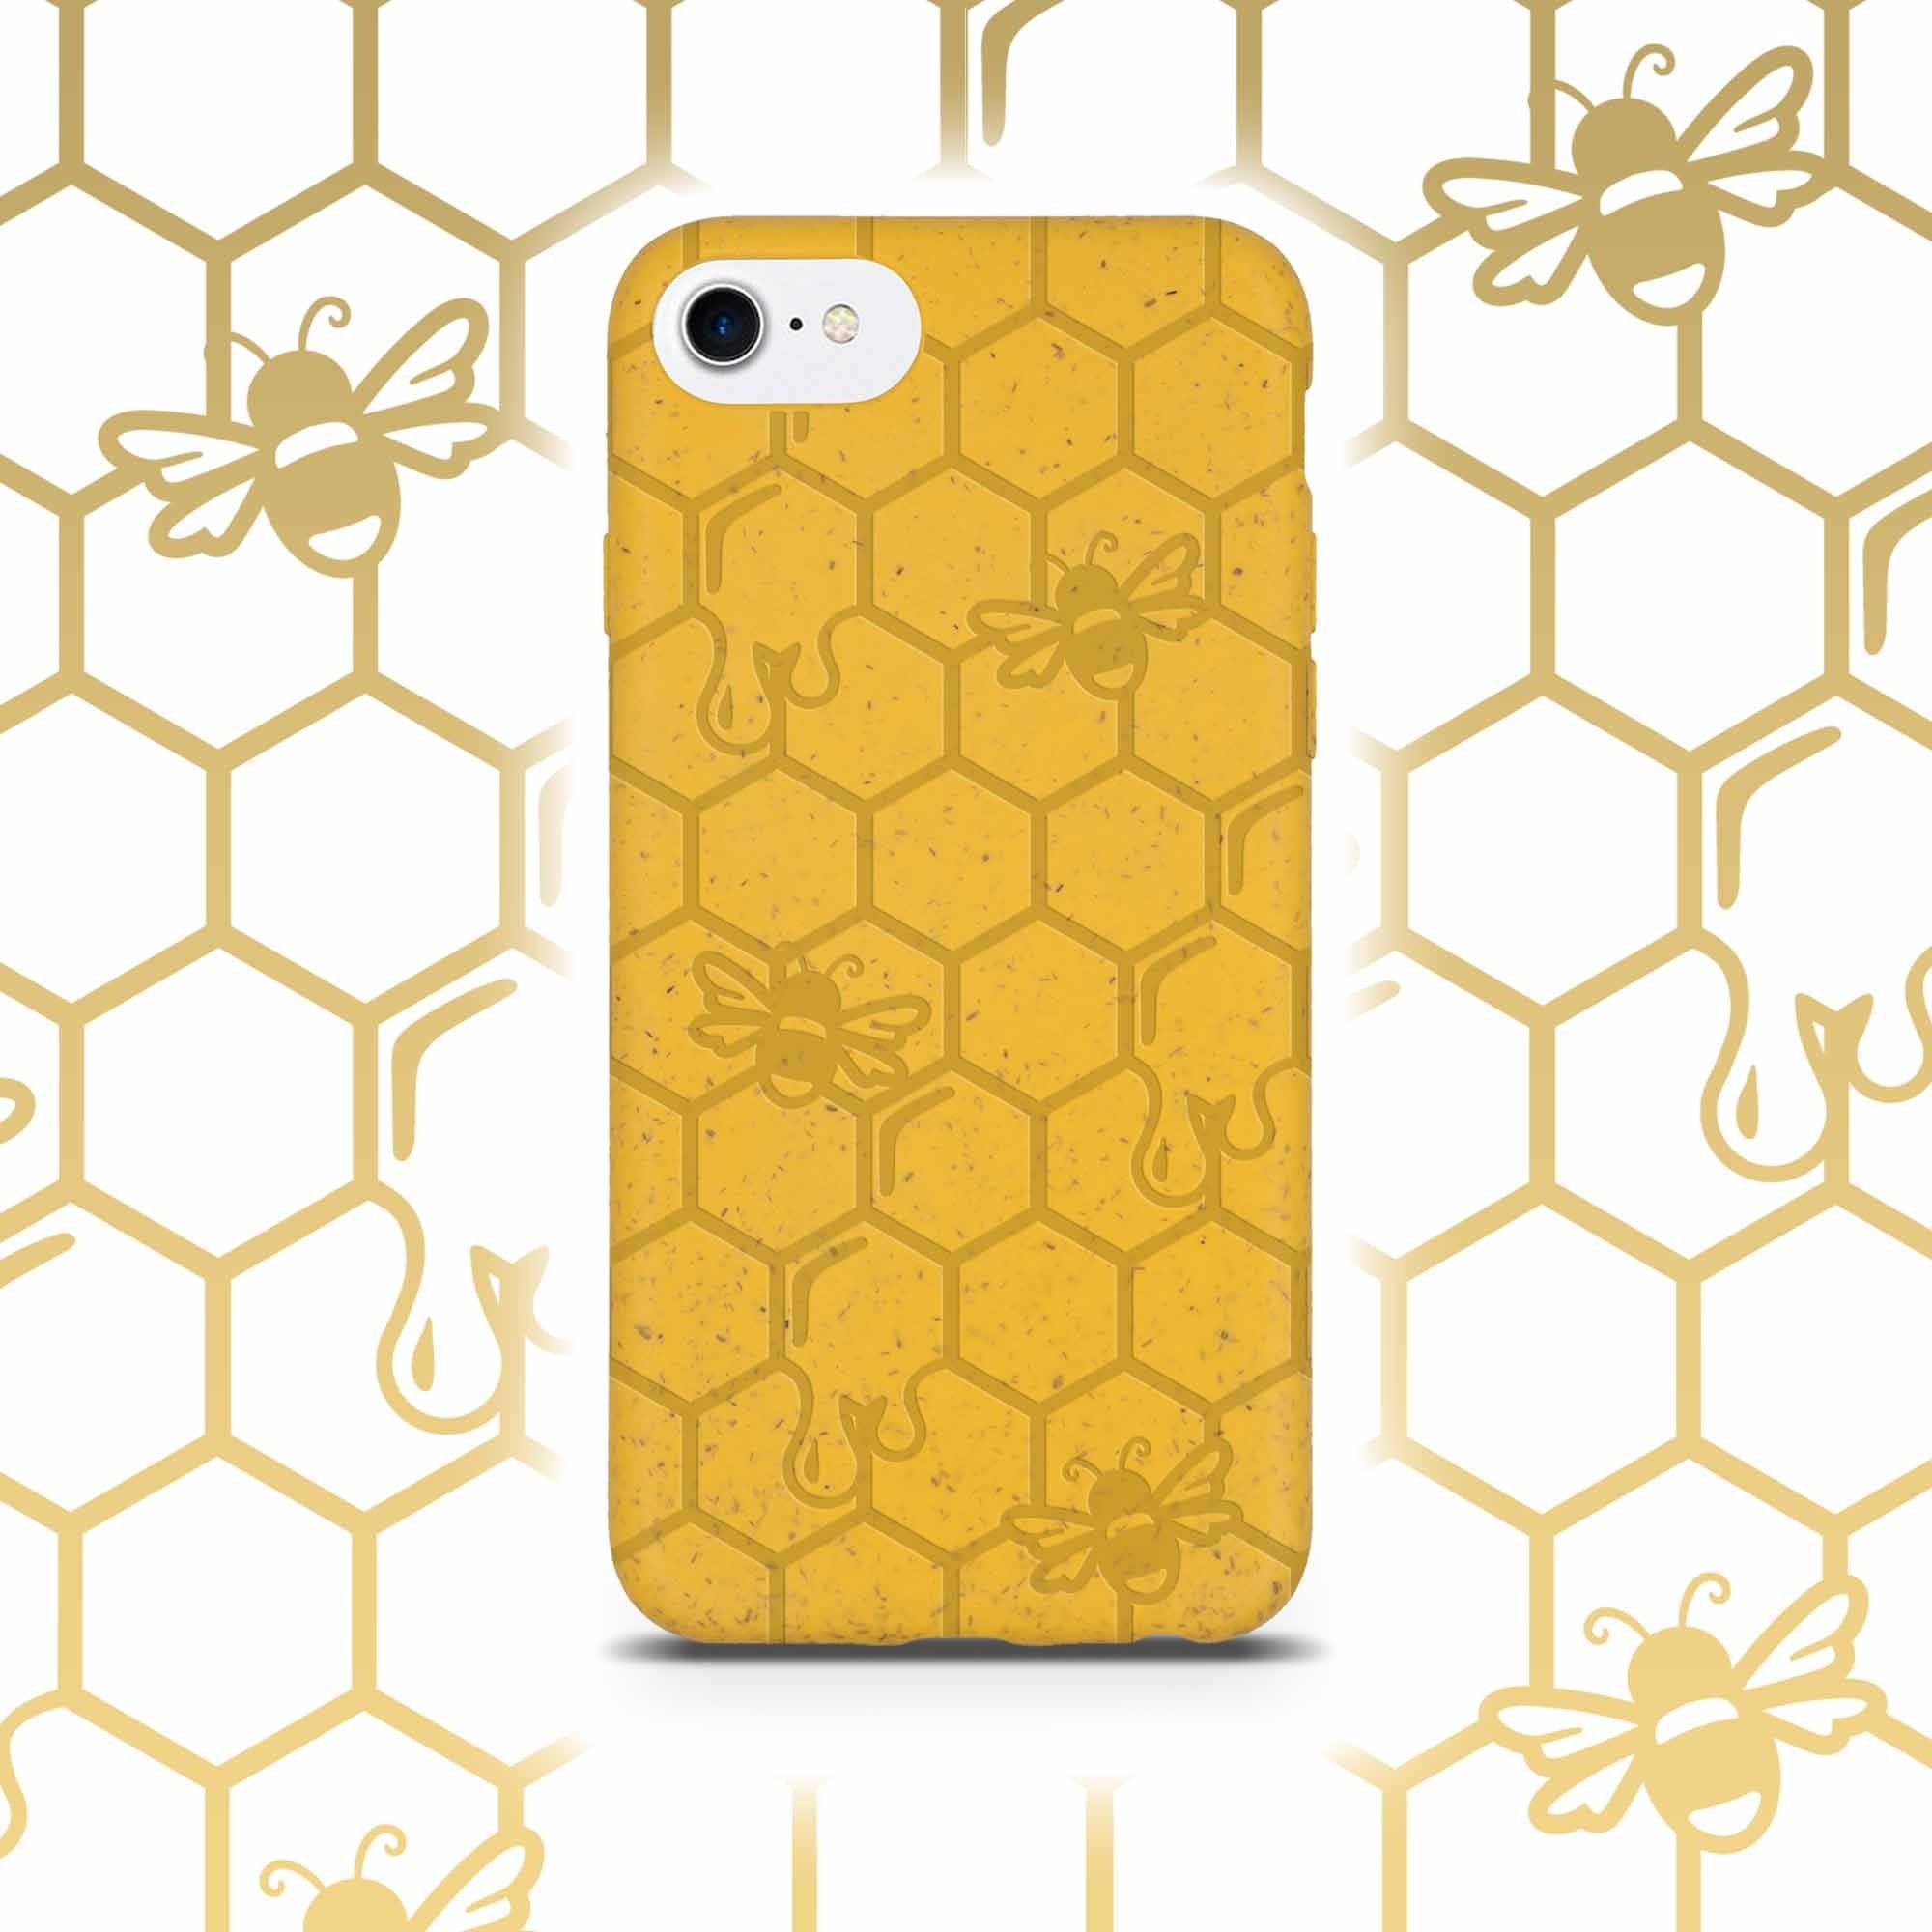 Pela Case | iPhone 6/6s/7/8/se Honey (Bee Edition) Compostable